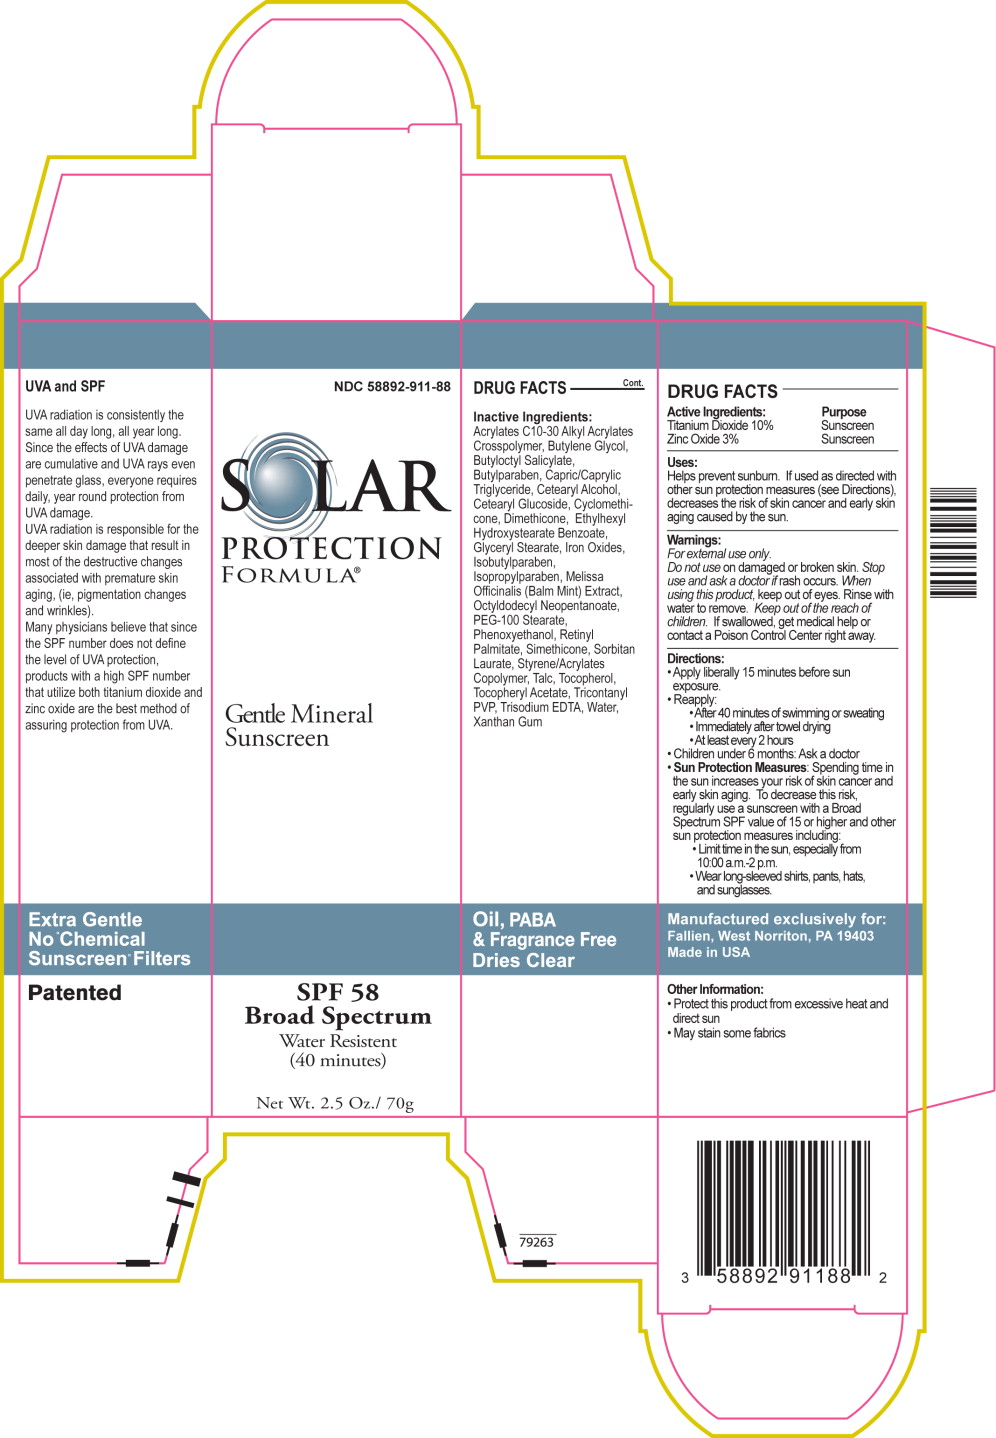 Principal Display Panel – Carton Label
